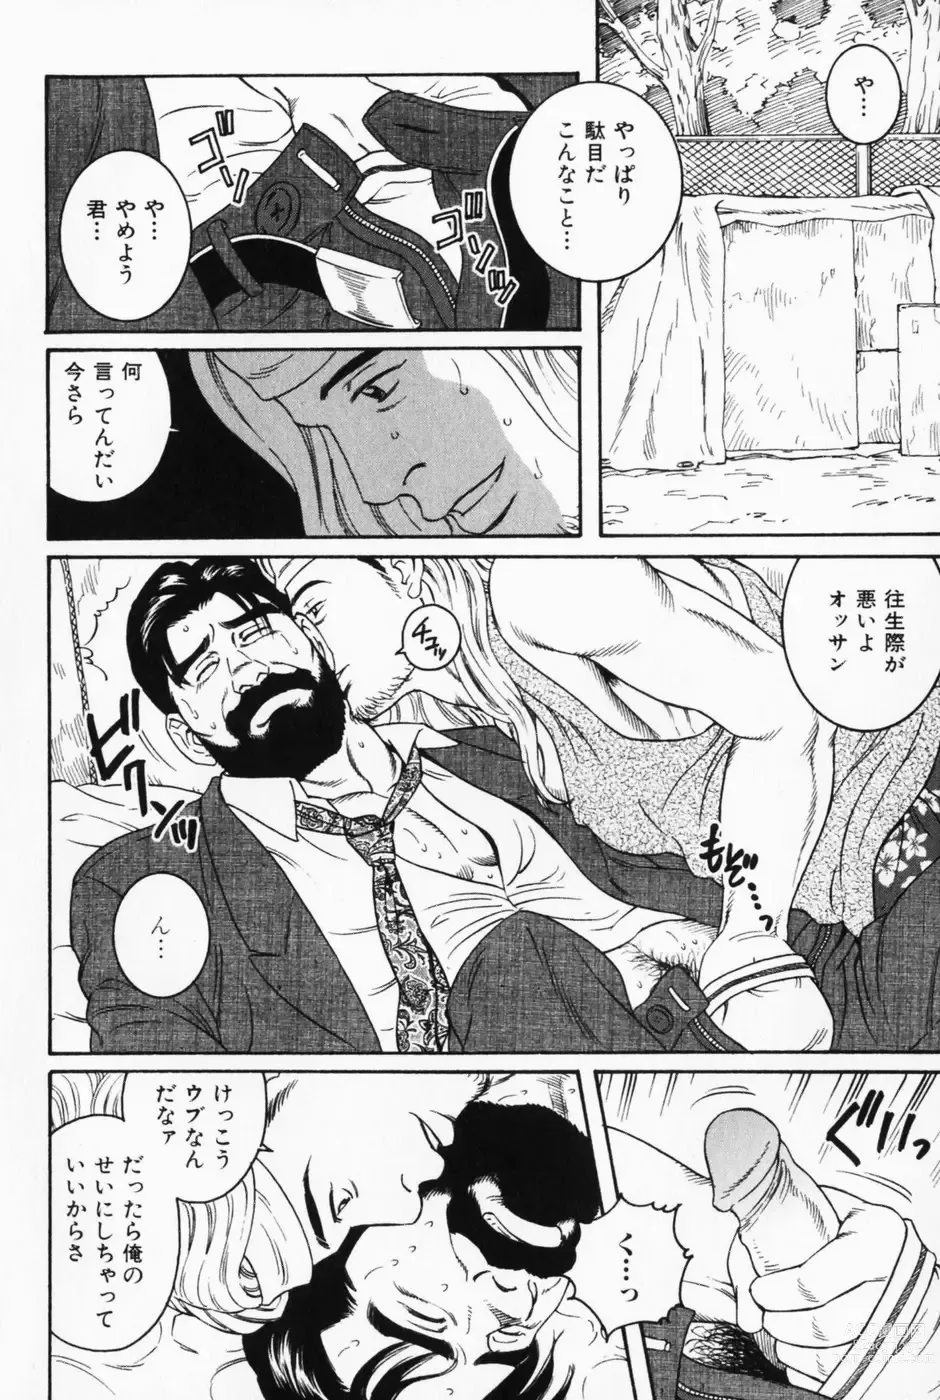 Page 8 of manga Shinkei-sei Ien